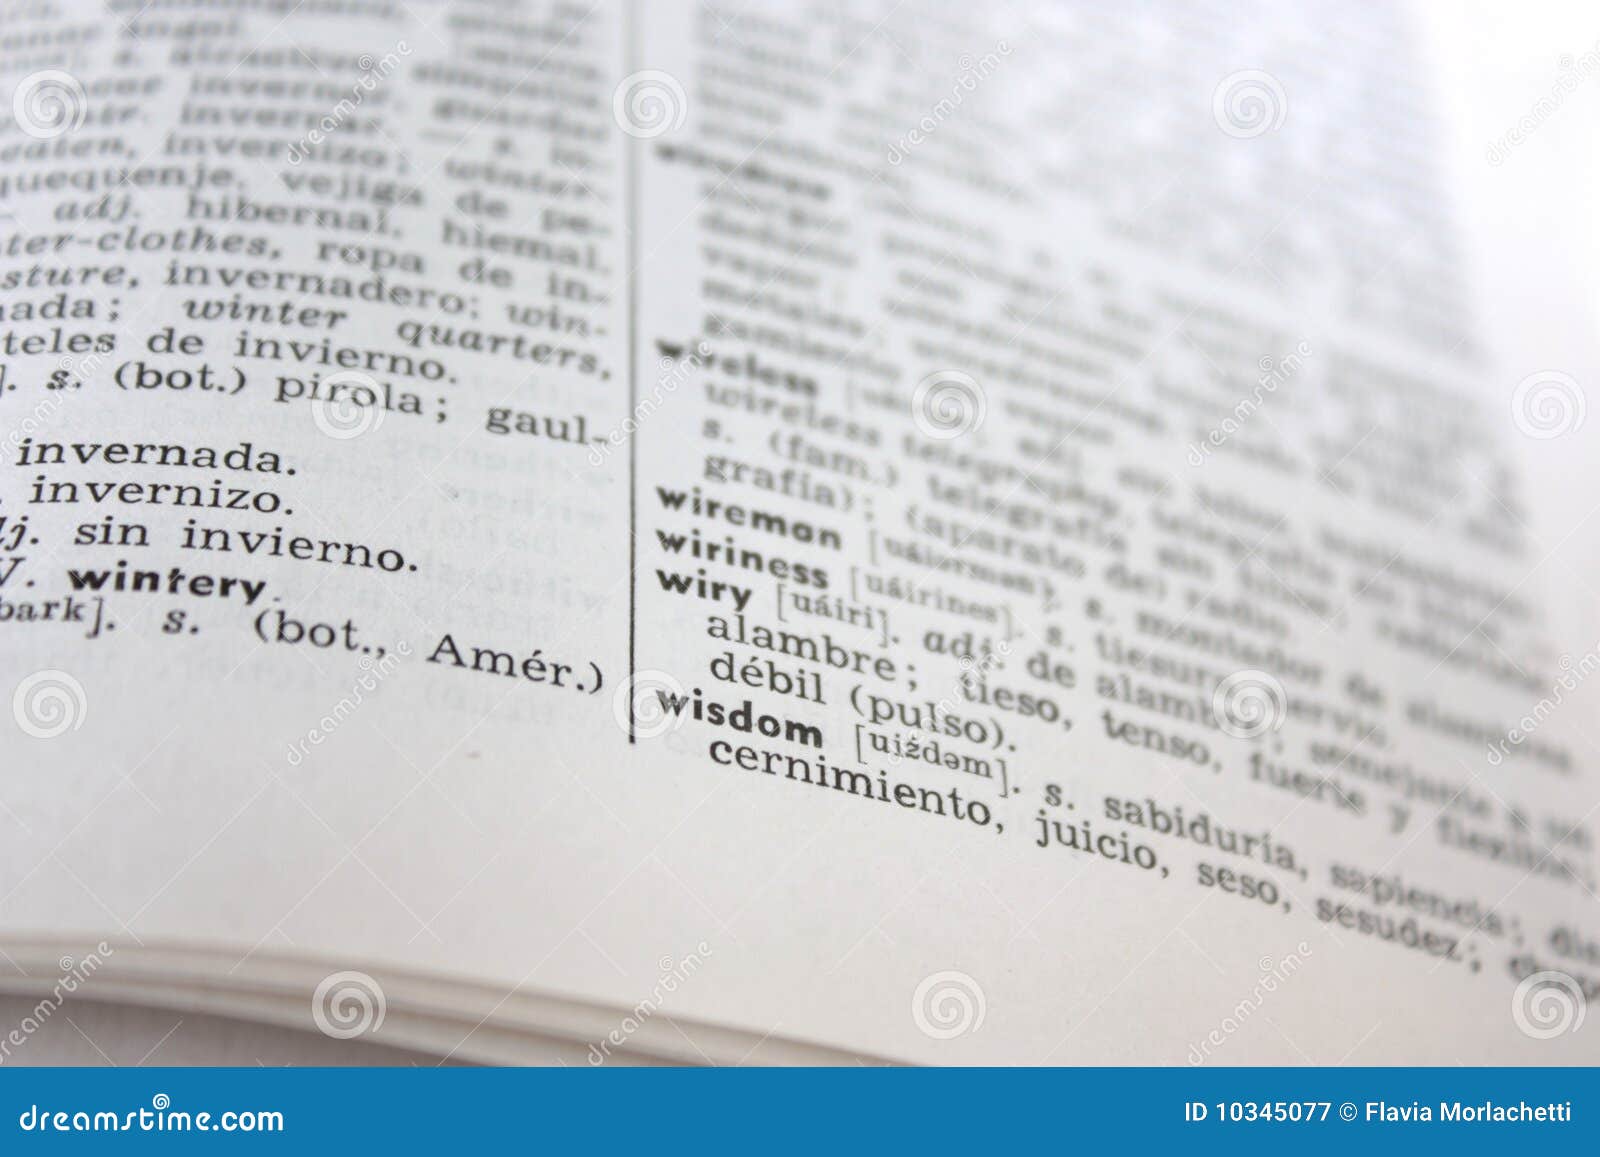 'wisdom' Word In English-Spanish Dictionary Stock Image ...